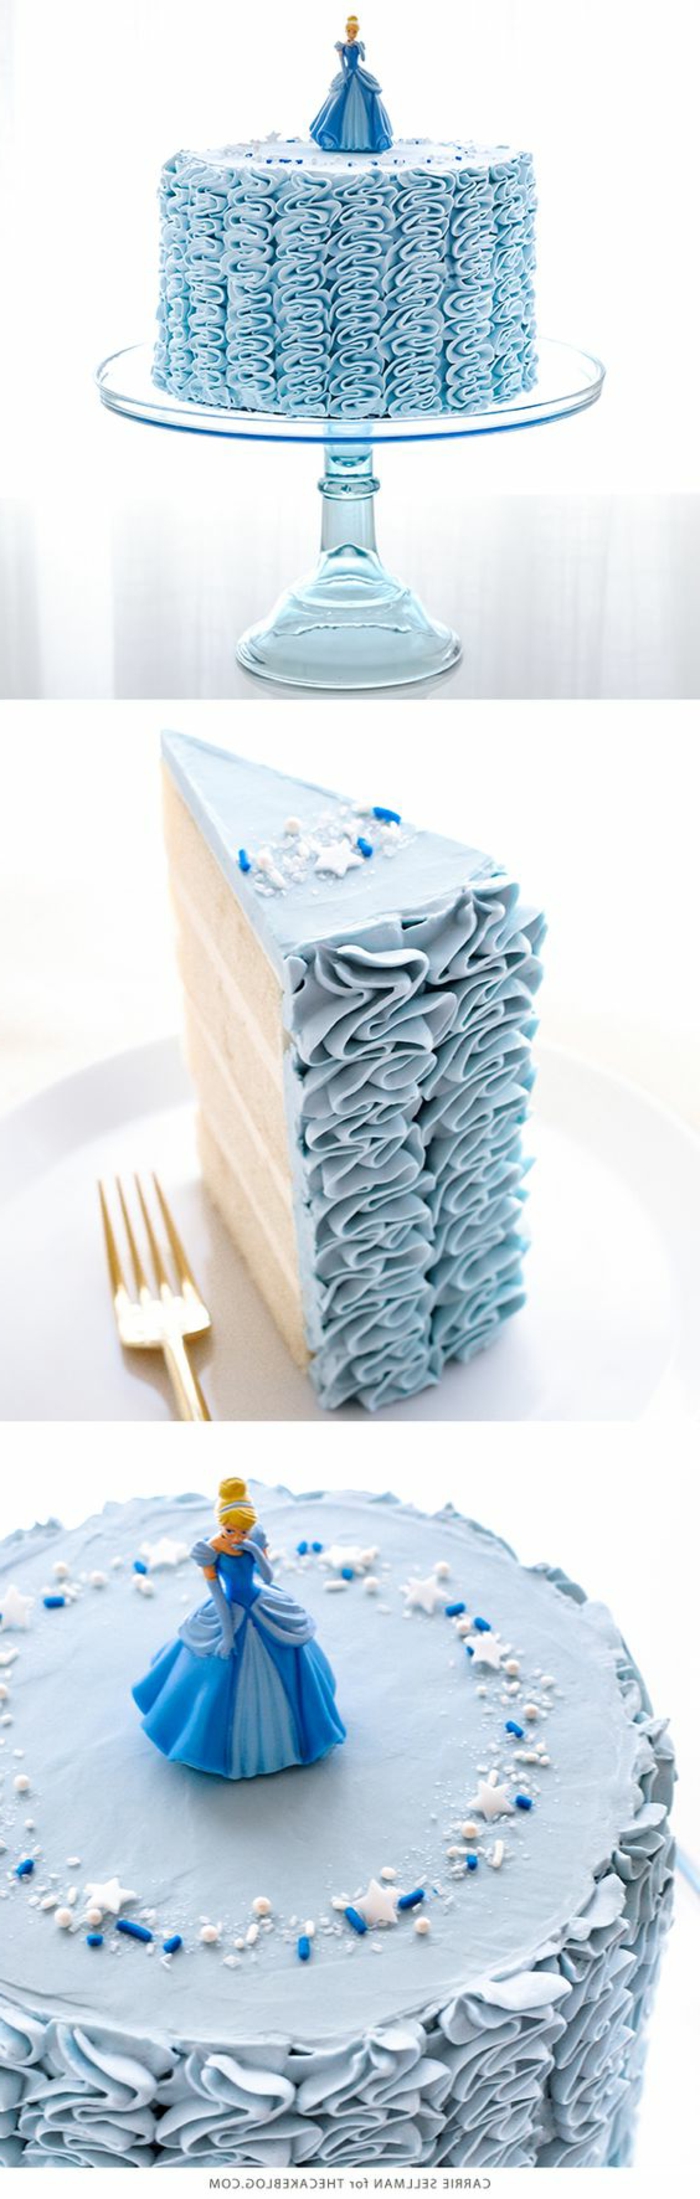 tartas-de-cumpleaños-dibujo-cenicienta-tarta-azul-niños-Disney